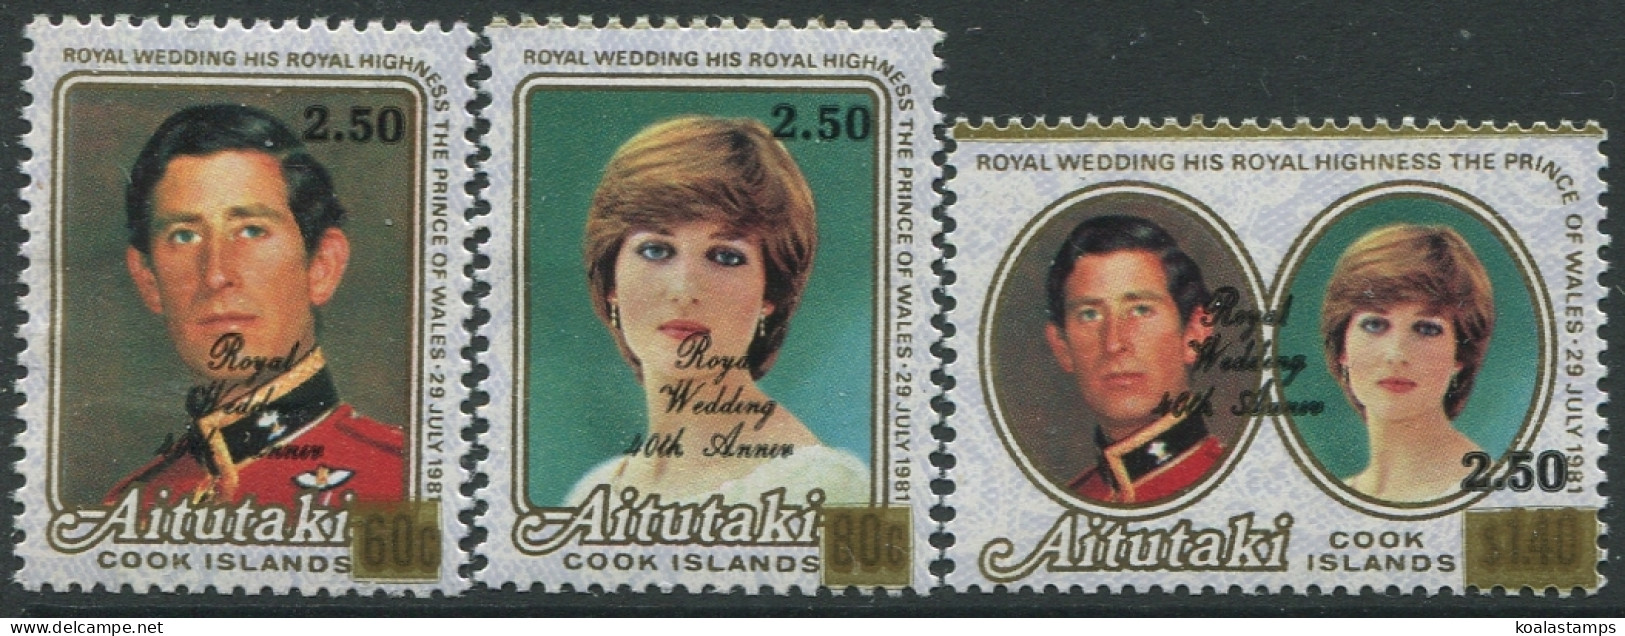 Aitutaki 1987 SG572-574 Royal Ruby Wedding Ovpts Set MNH - Cook